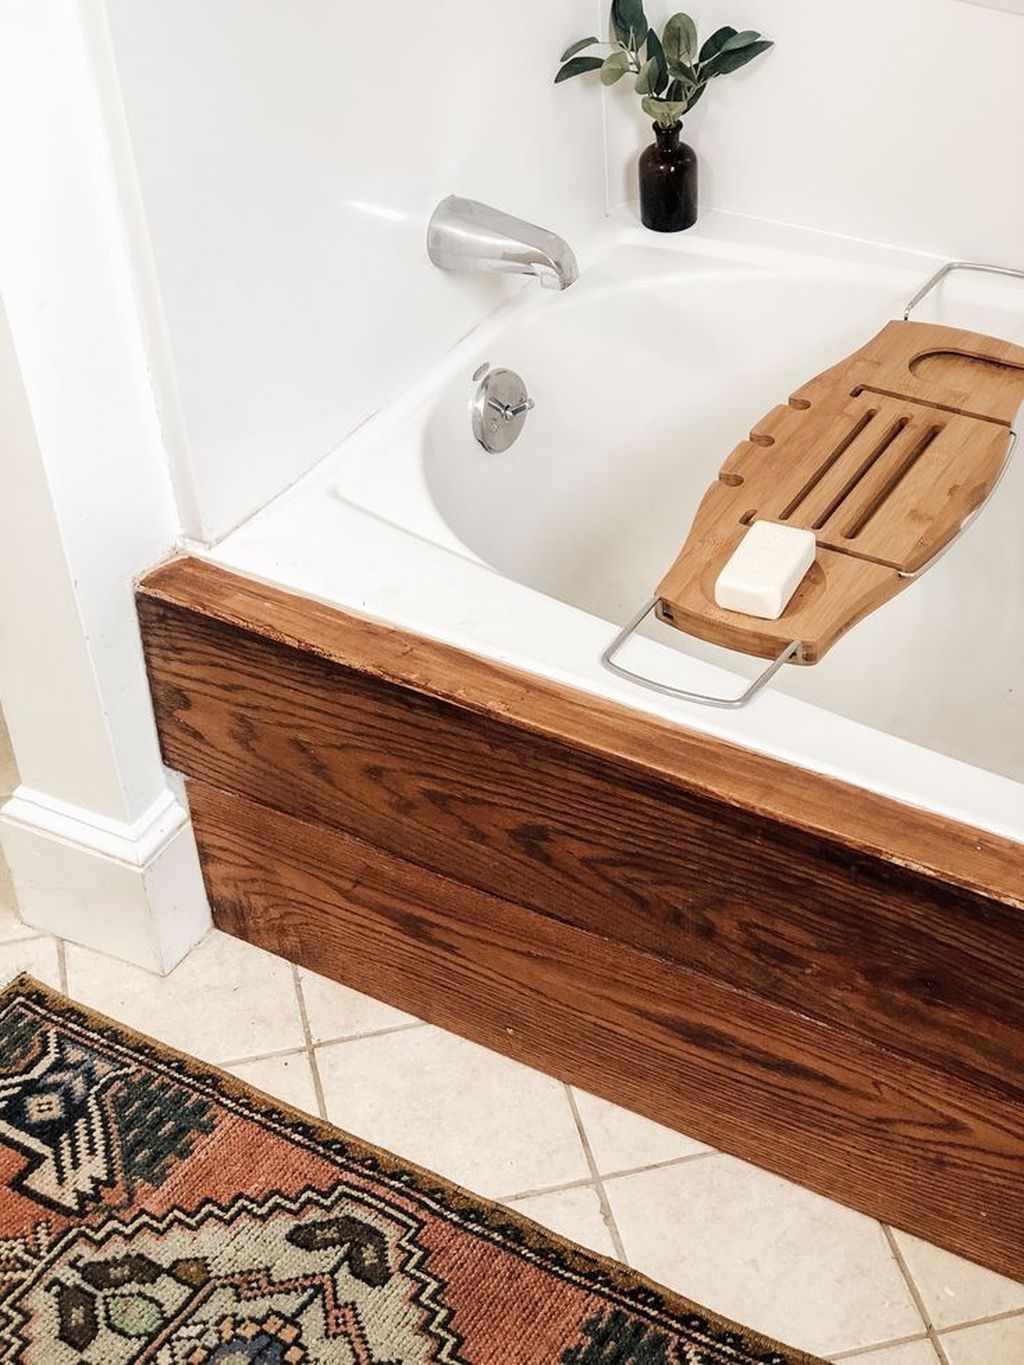 Inspiring Bathroom Decoration Ideas With Wooden Storage 39